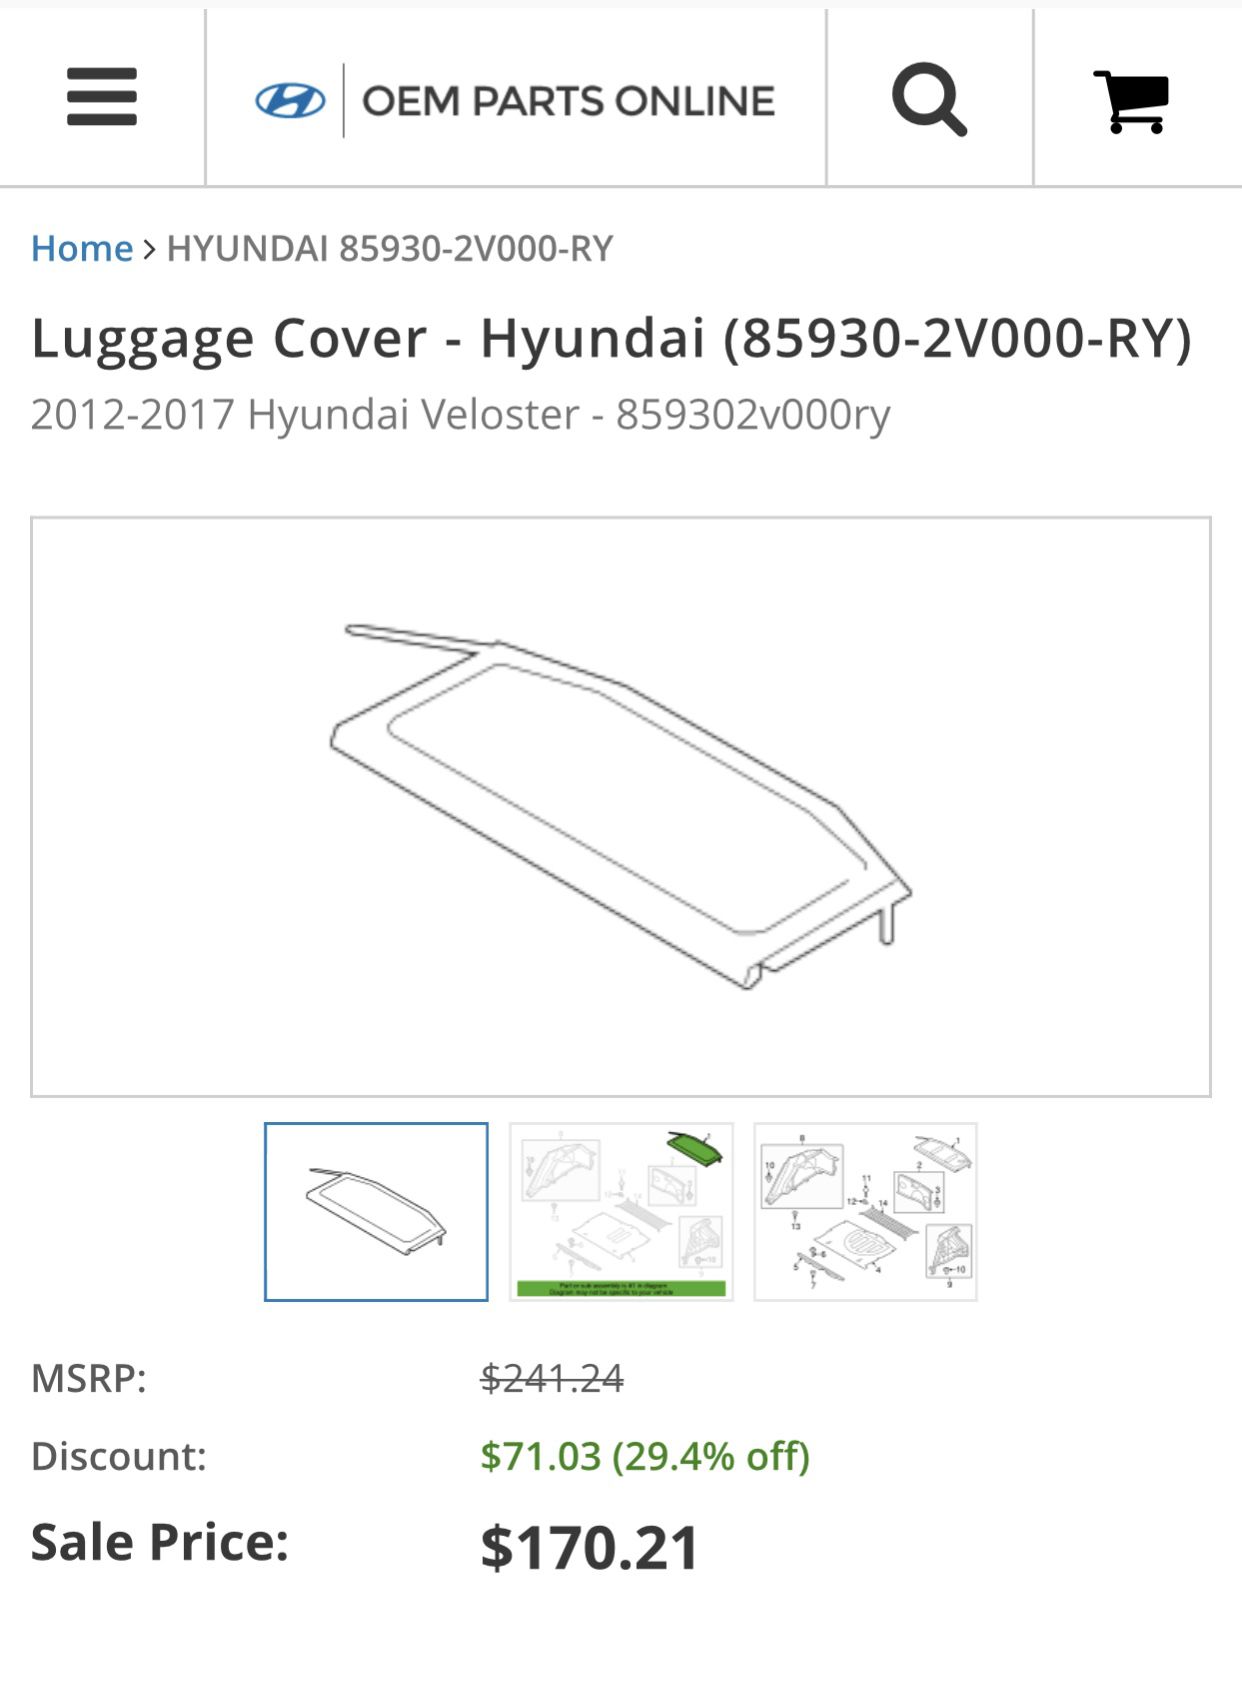 2016 Hyundai Veloster Luggage Cover